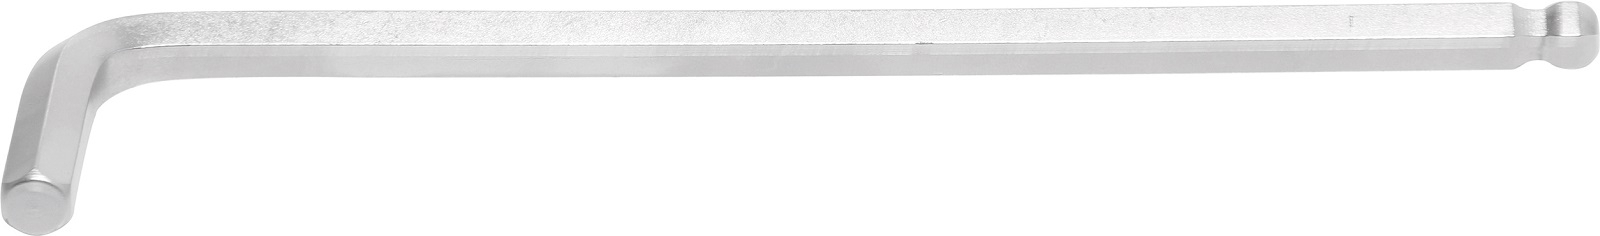 Winkelschlüssel | extra lang | Innensechskant/Innensechskant mit Kugelkopf 10 mm - BGS 790-10